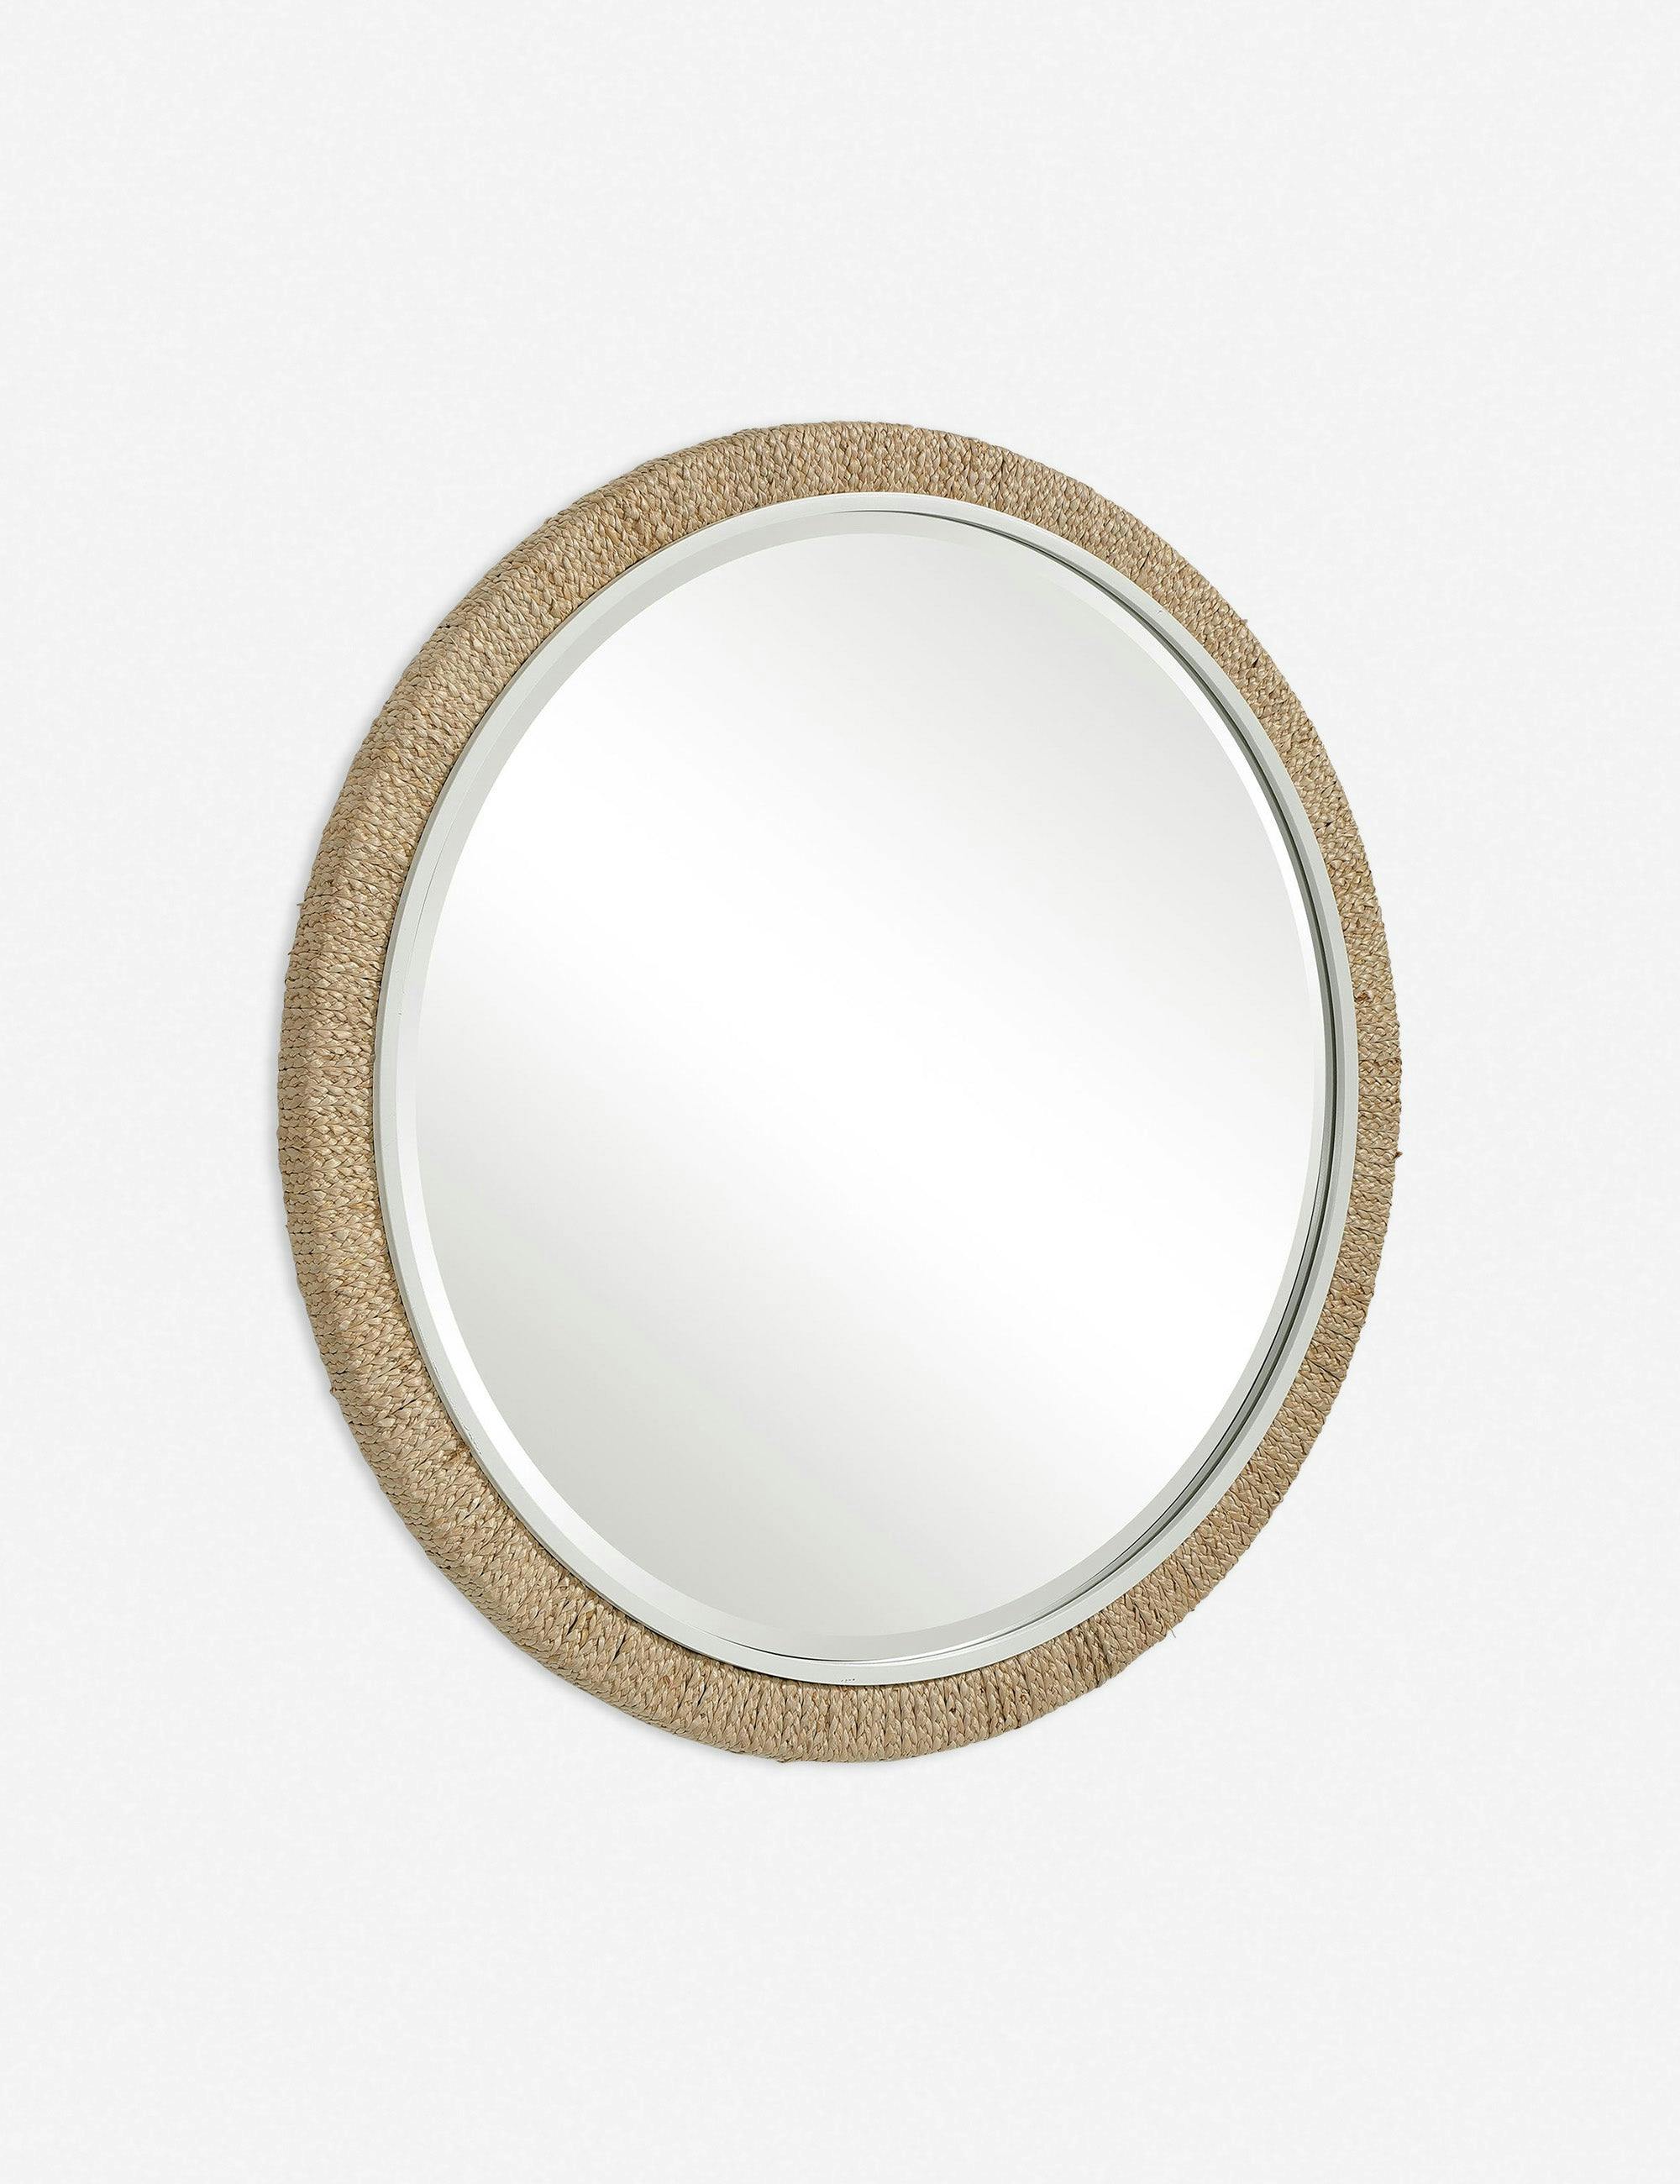 Coastal Charm 40" Round Beveled Mirror with White and Brown Banana Leaf Frame